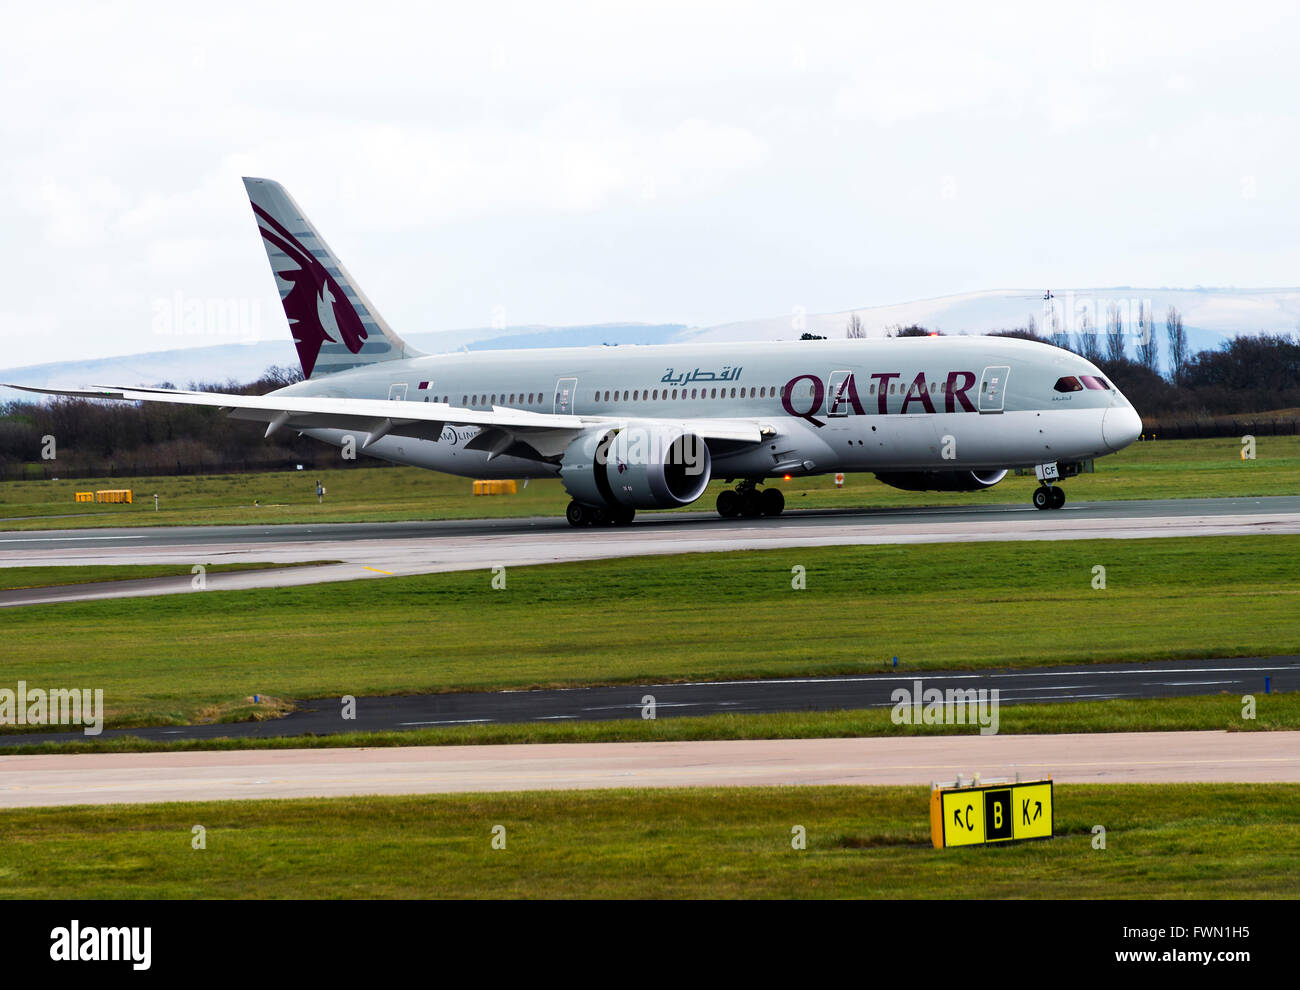 Qatar Airways Boeing 787-8 Dreamliner Airliner A7-BCF Landing at Manchester International Airport England United Kingdom UK Stock Photo